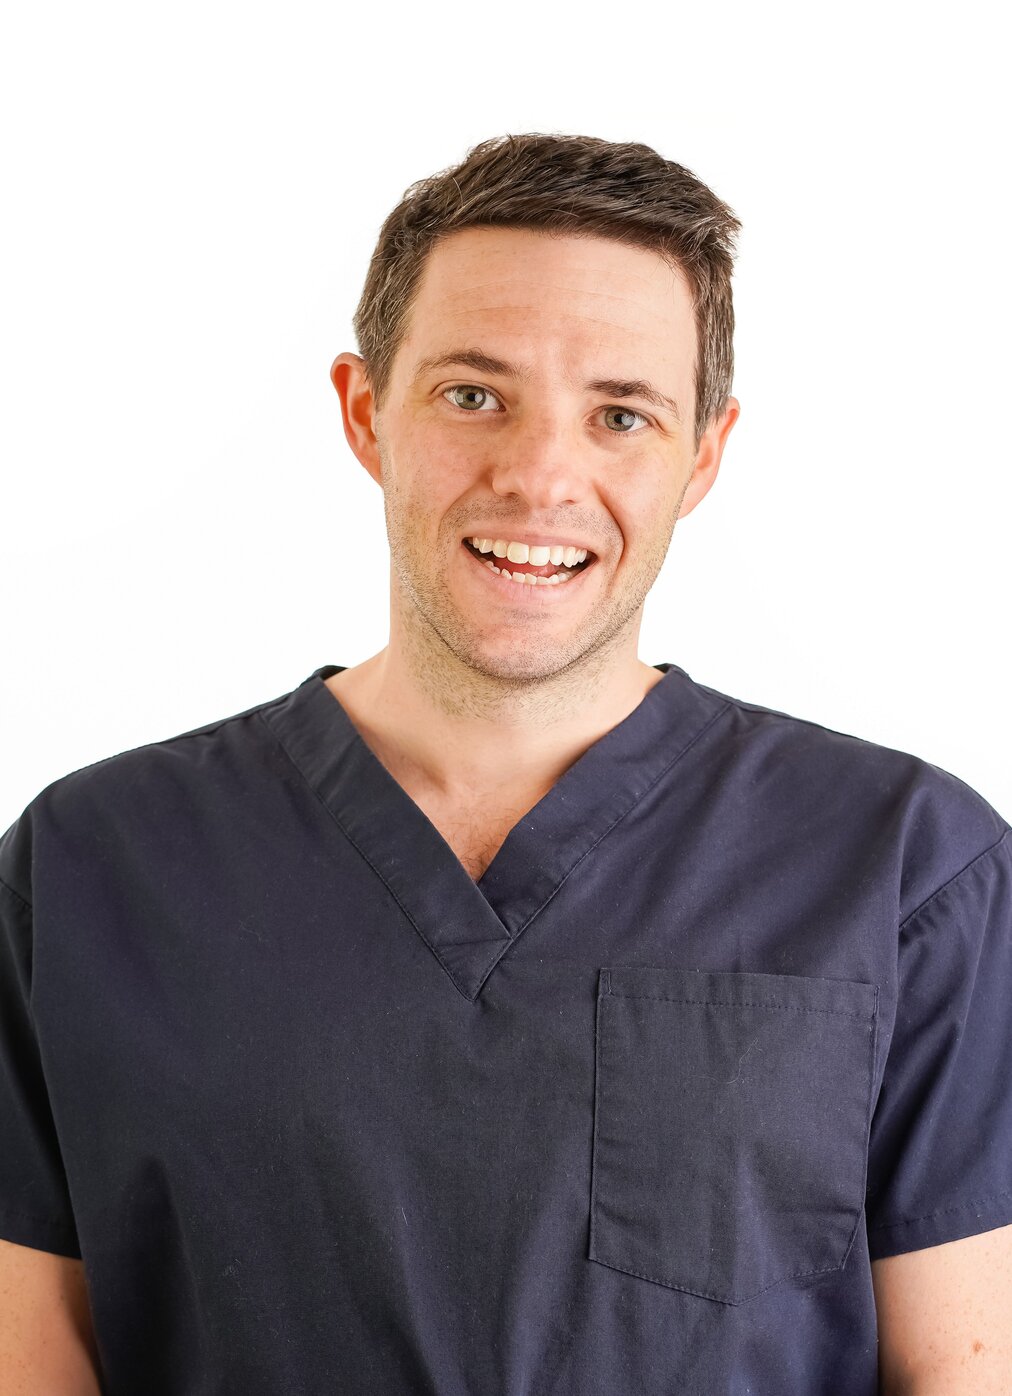 Dr. Michael Stone's profile photo.